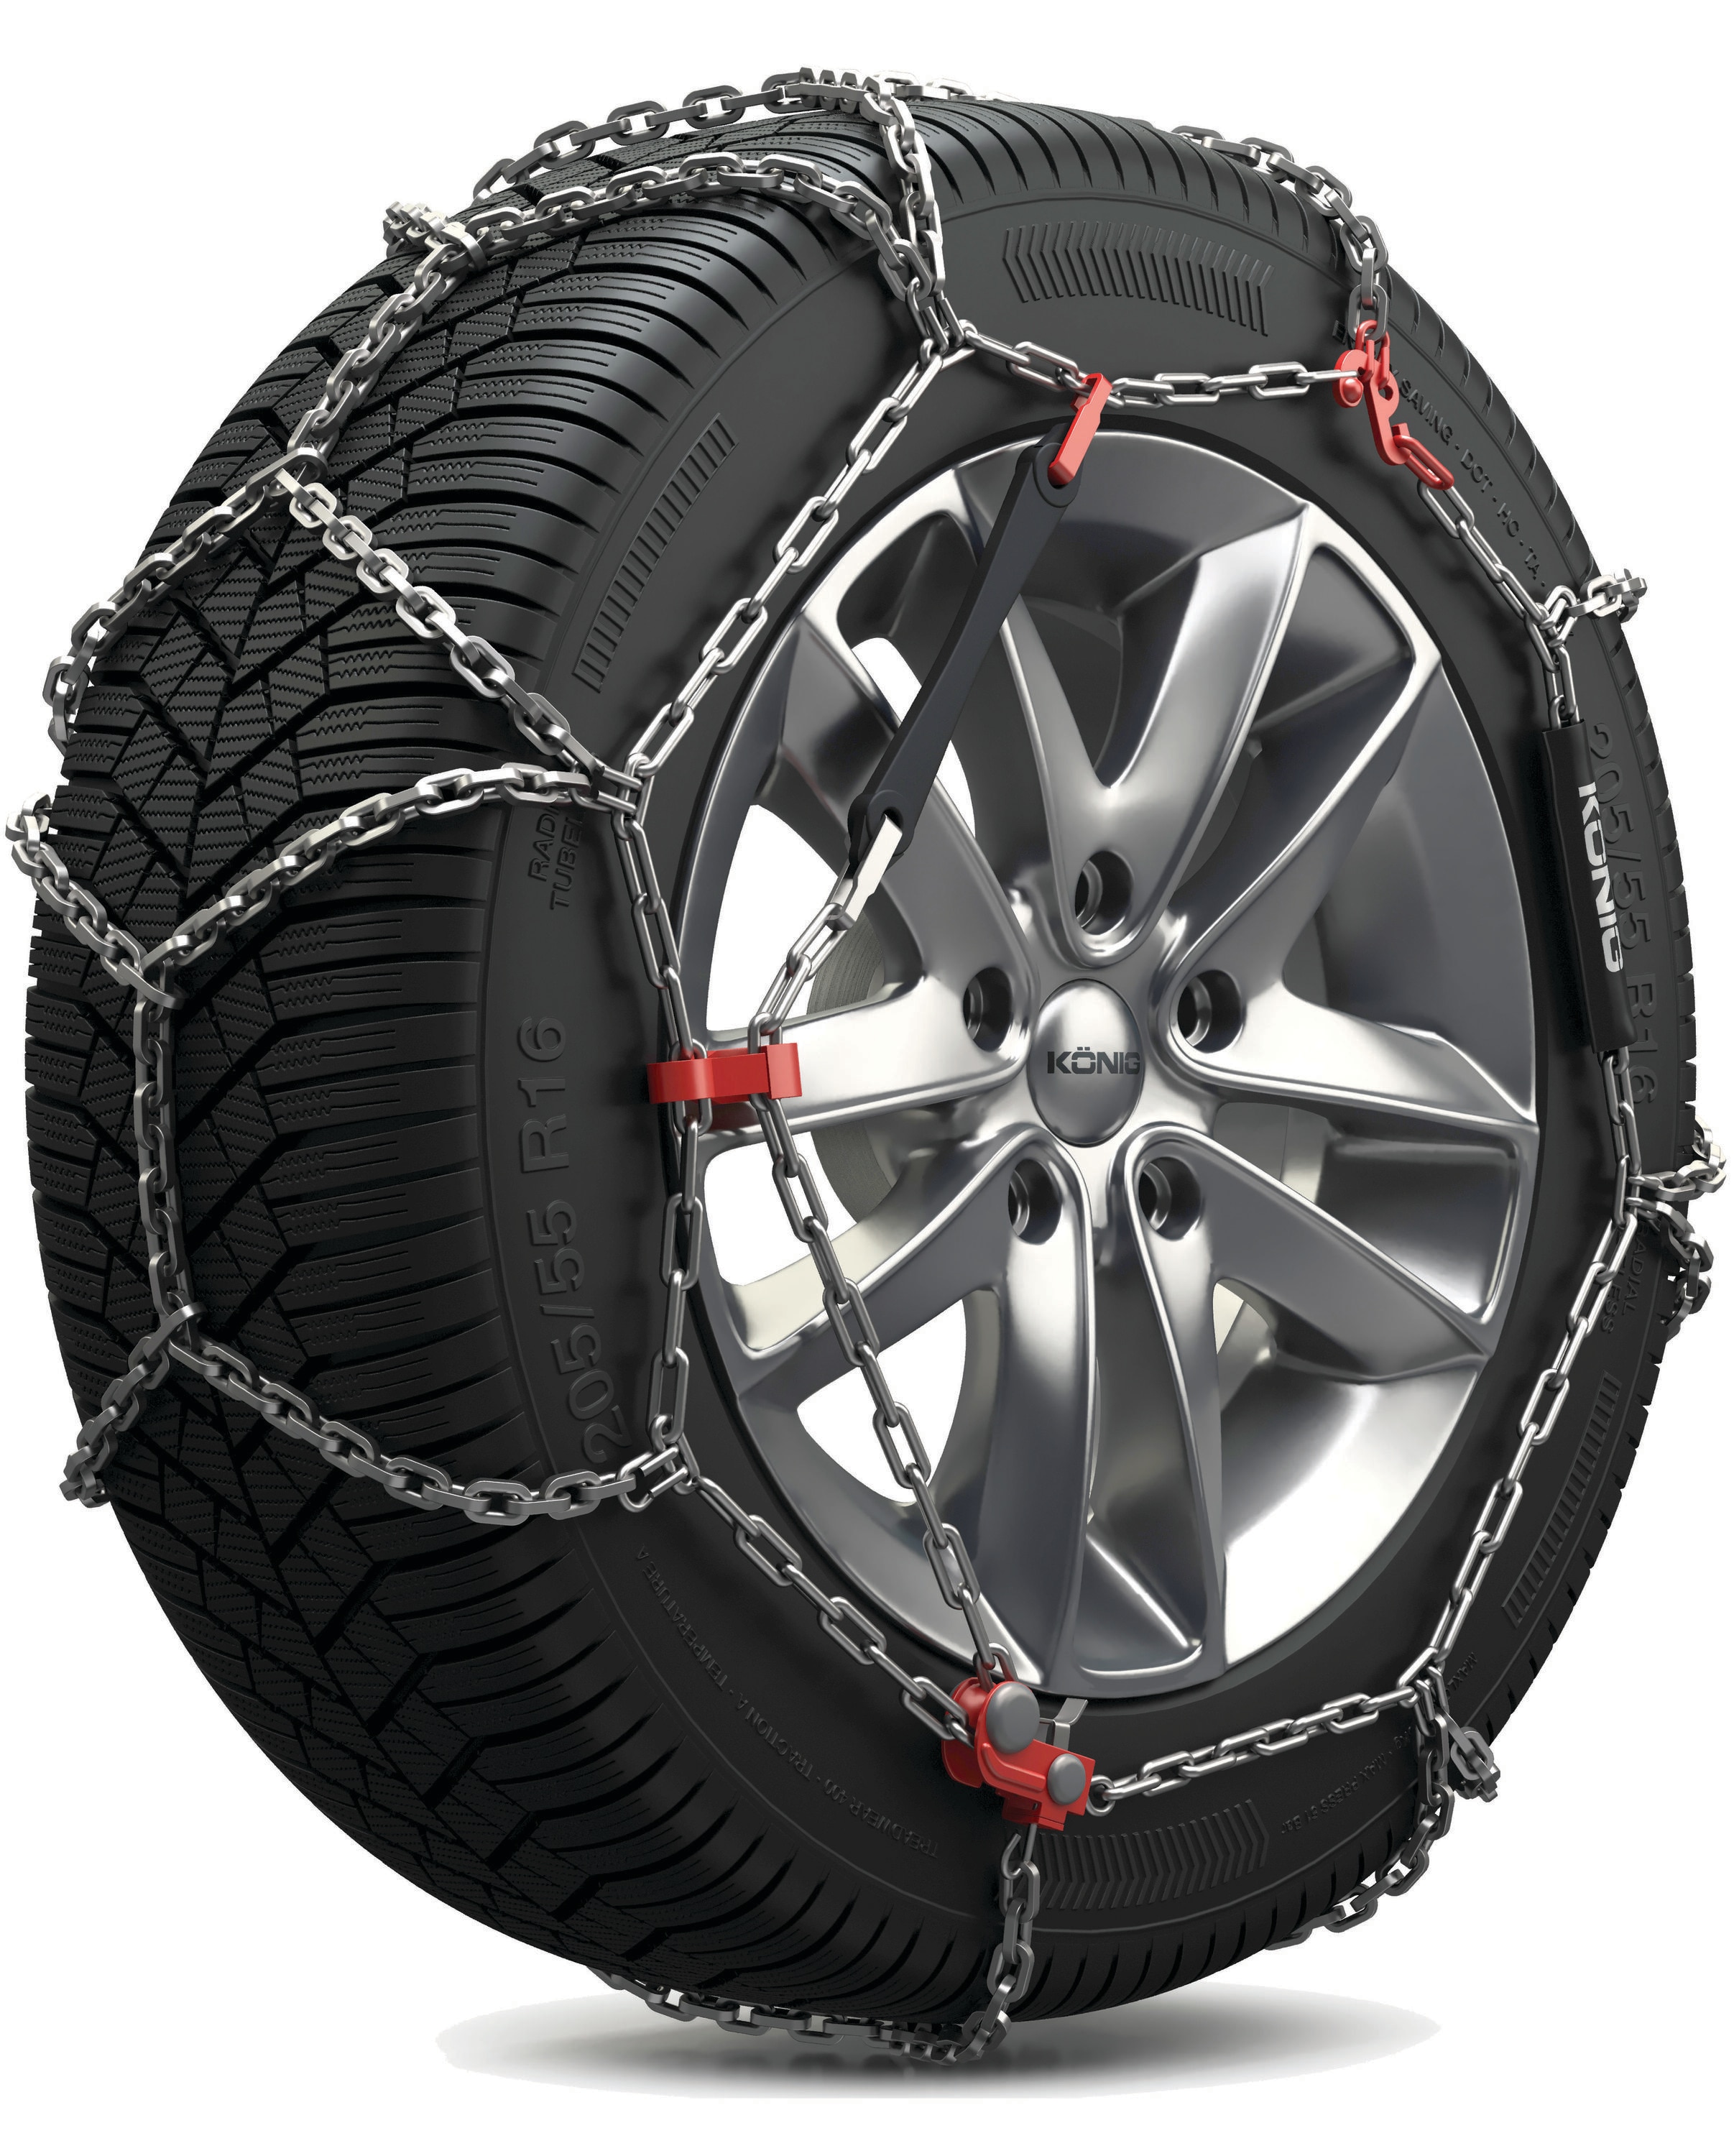 Pewag 2004365097 CB-12 Tire Chains